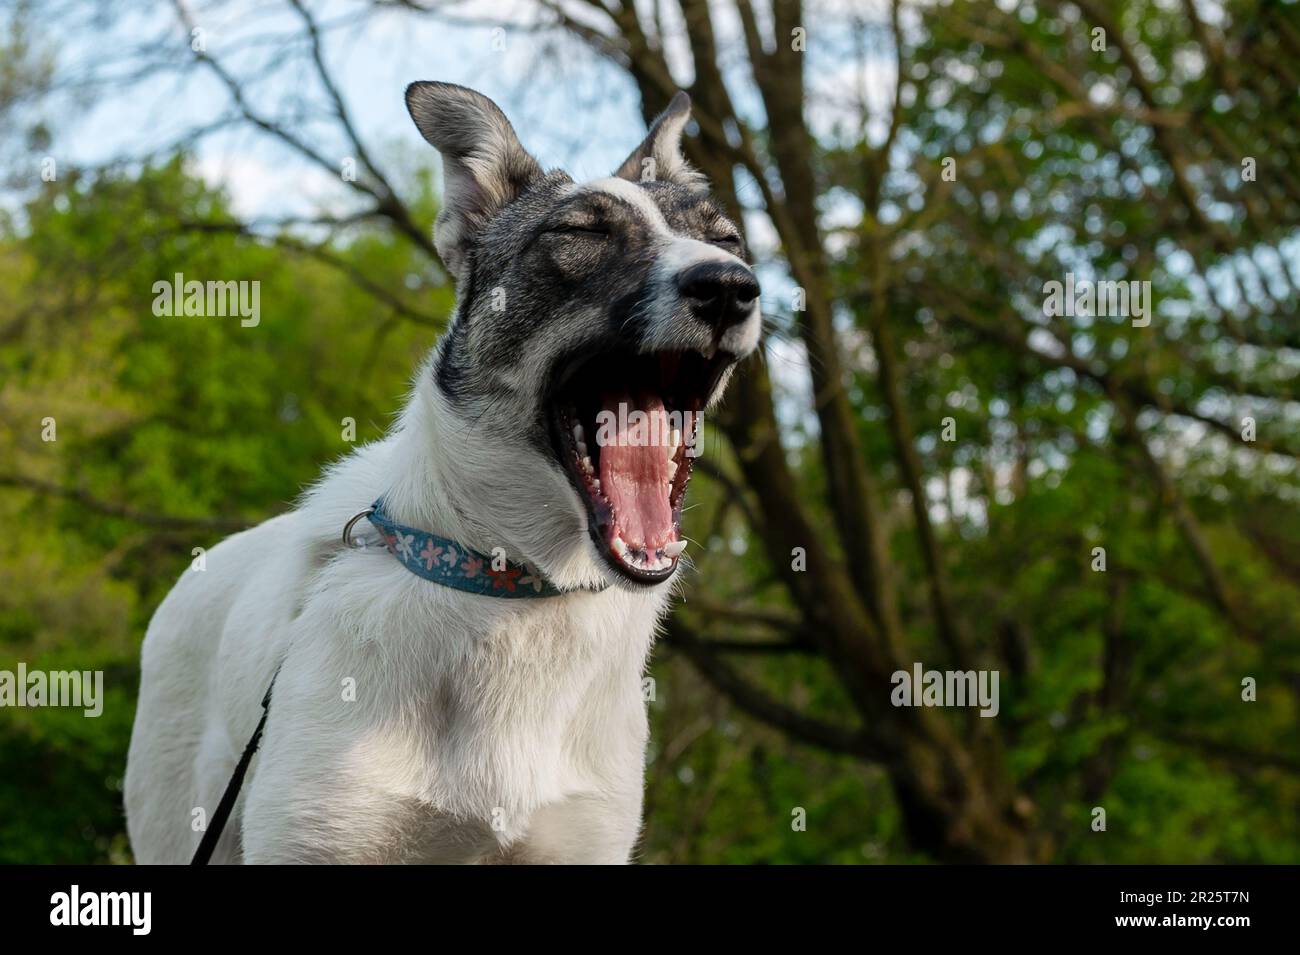 Perro bostezo. Retrato de un perro mestizo en la naturaleza. Foto de primer plano de un perro adorable. Foto de stock